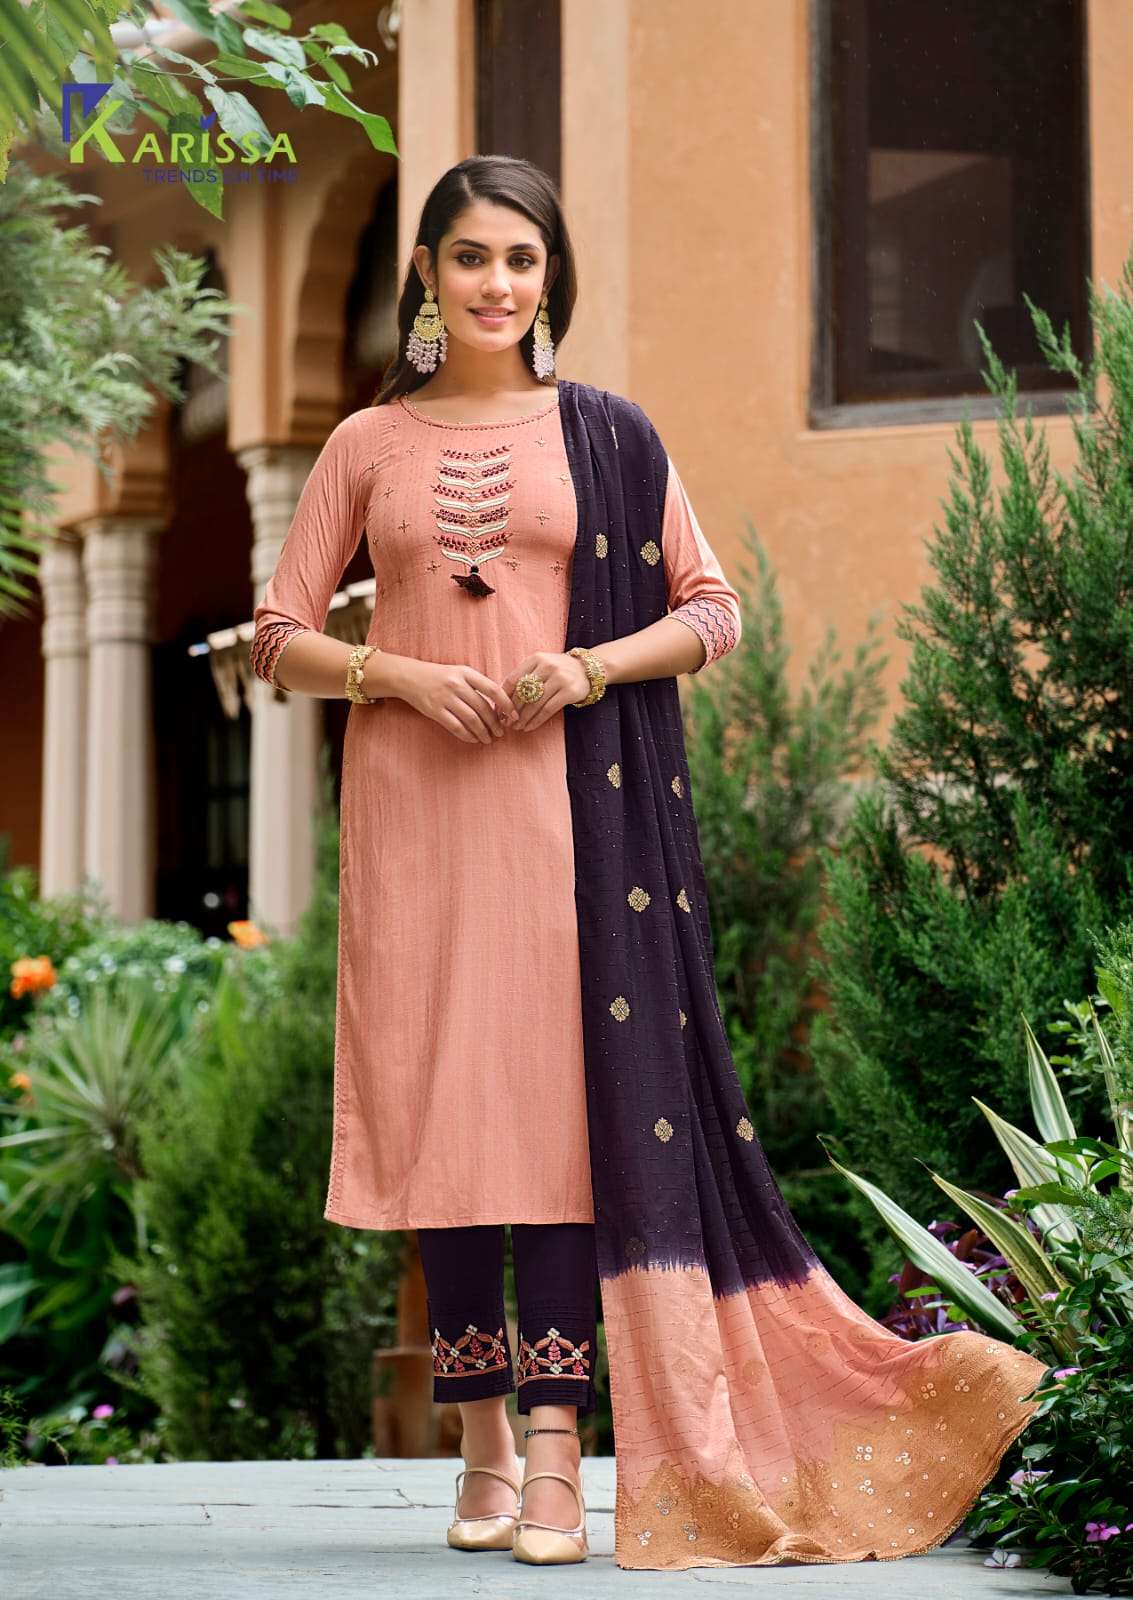 Anushka Buy Karissa Online Wholesaler Latest Collection Kurta Suit Set